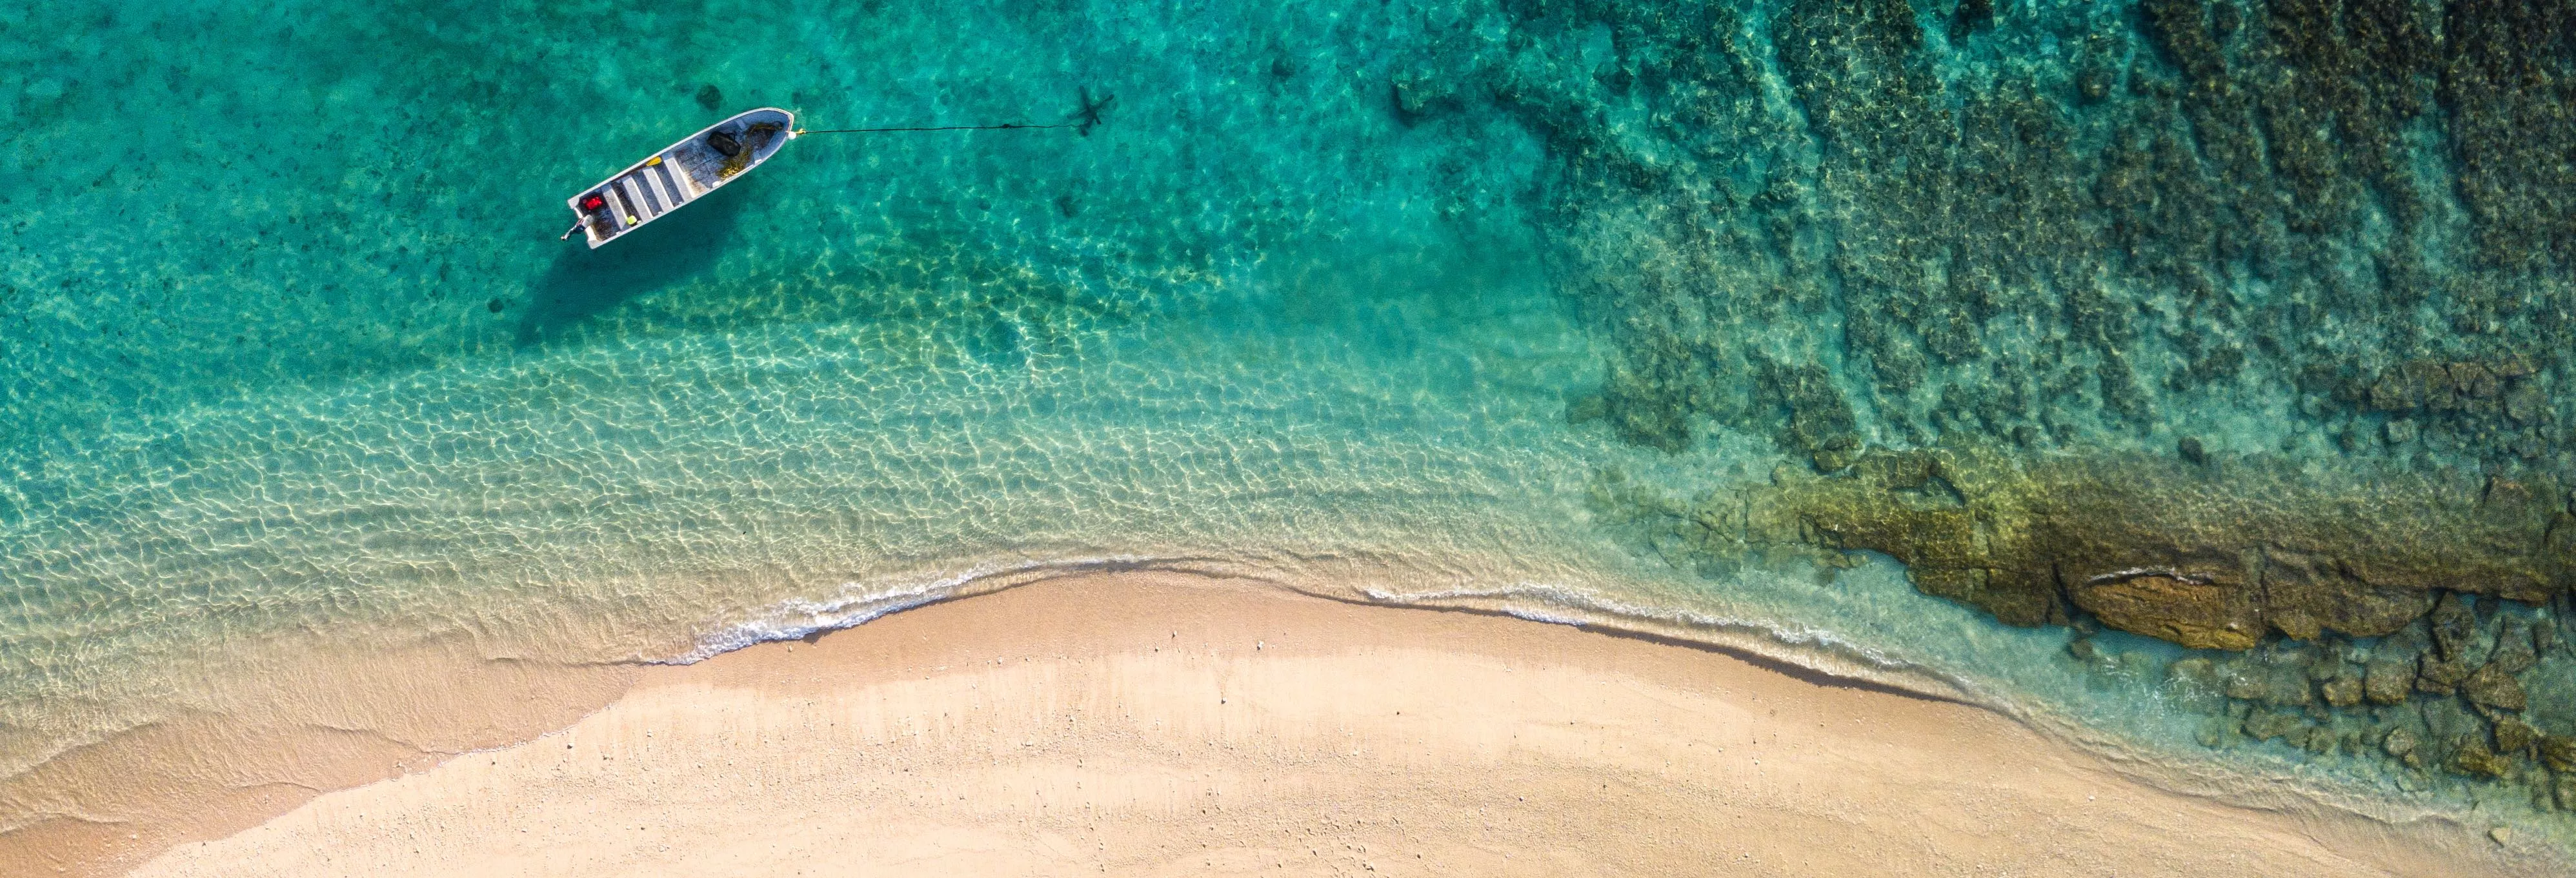 Namotu Island in Fiji, Australia and Oceania | Surfing,Beaches - Rated 0.9